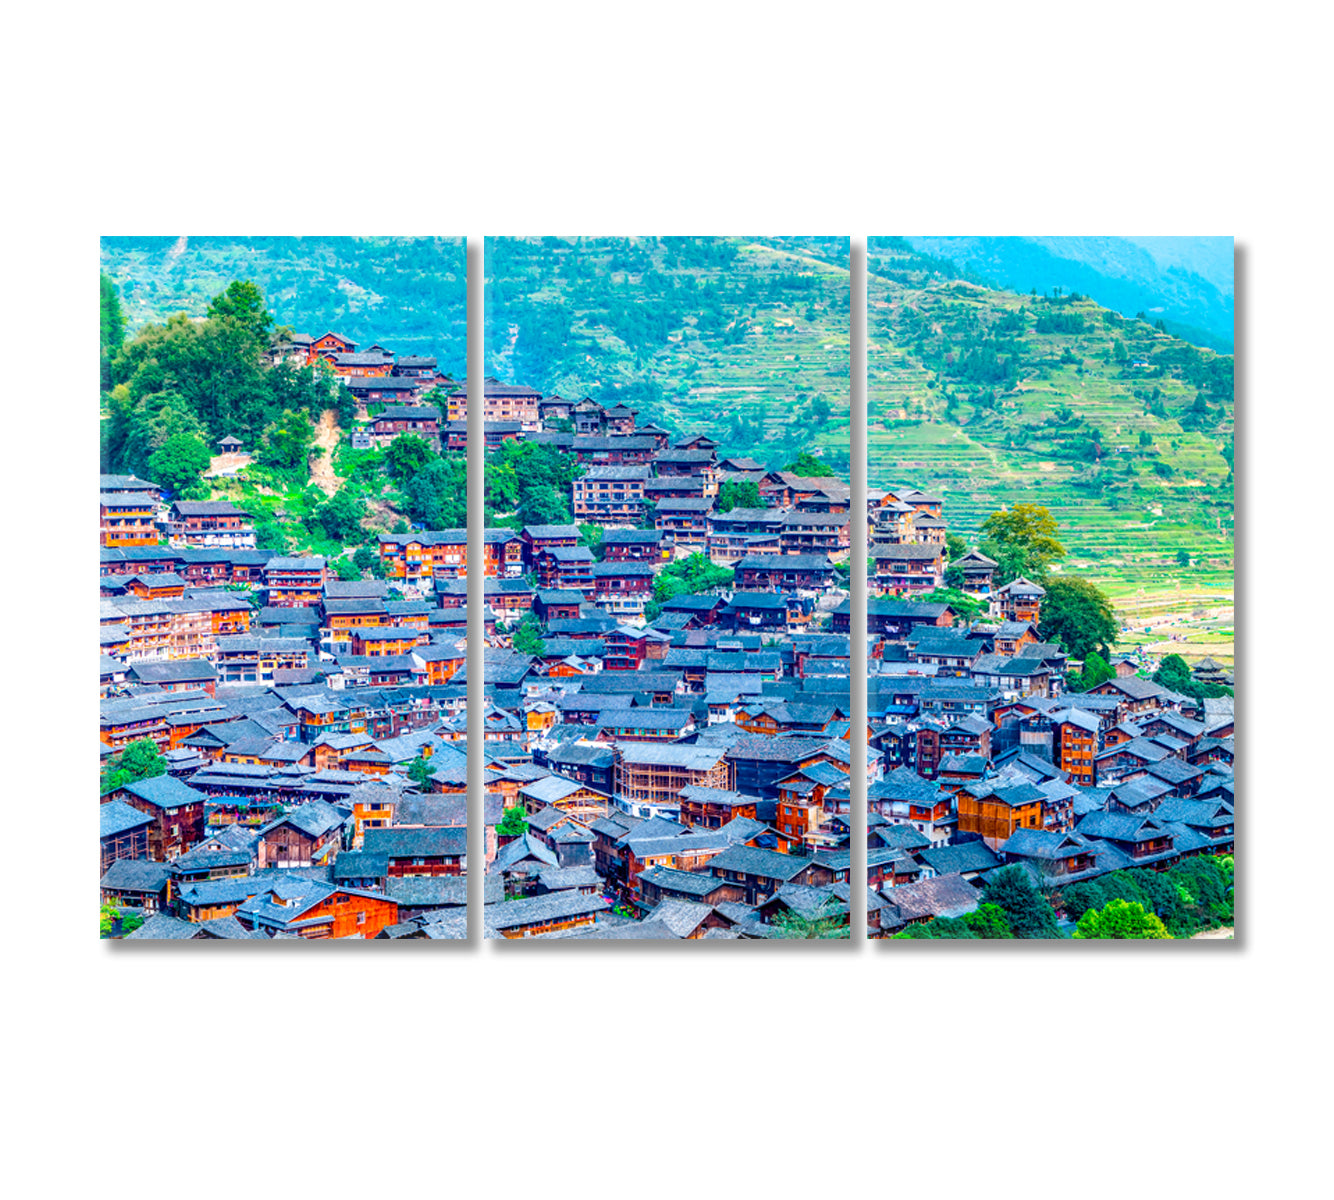 Xijiang Miao Village Guizhou China Canvas Print-Canvas Print-CetArt-3 Panels-36x24 inches-CetArt